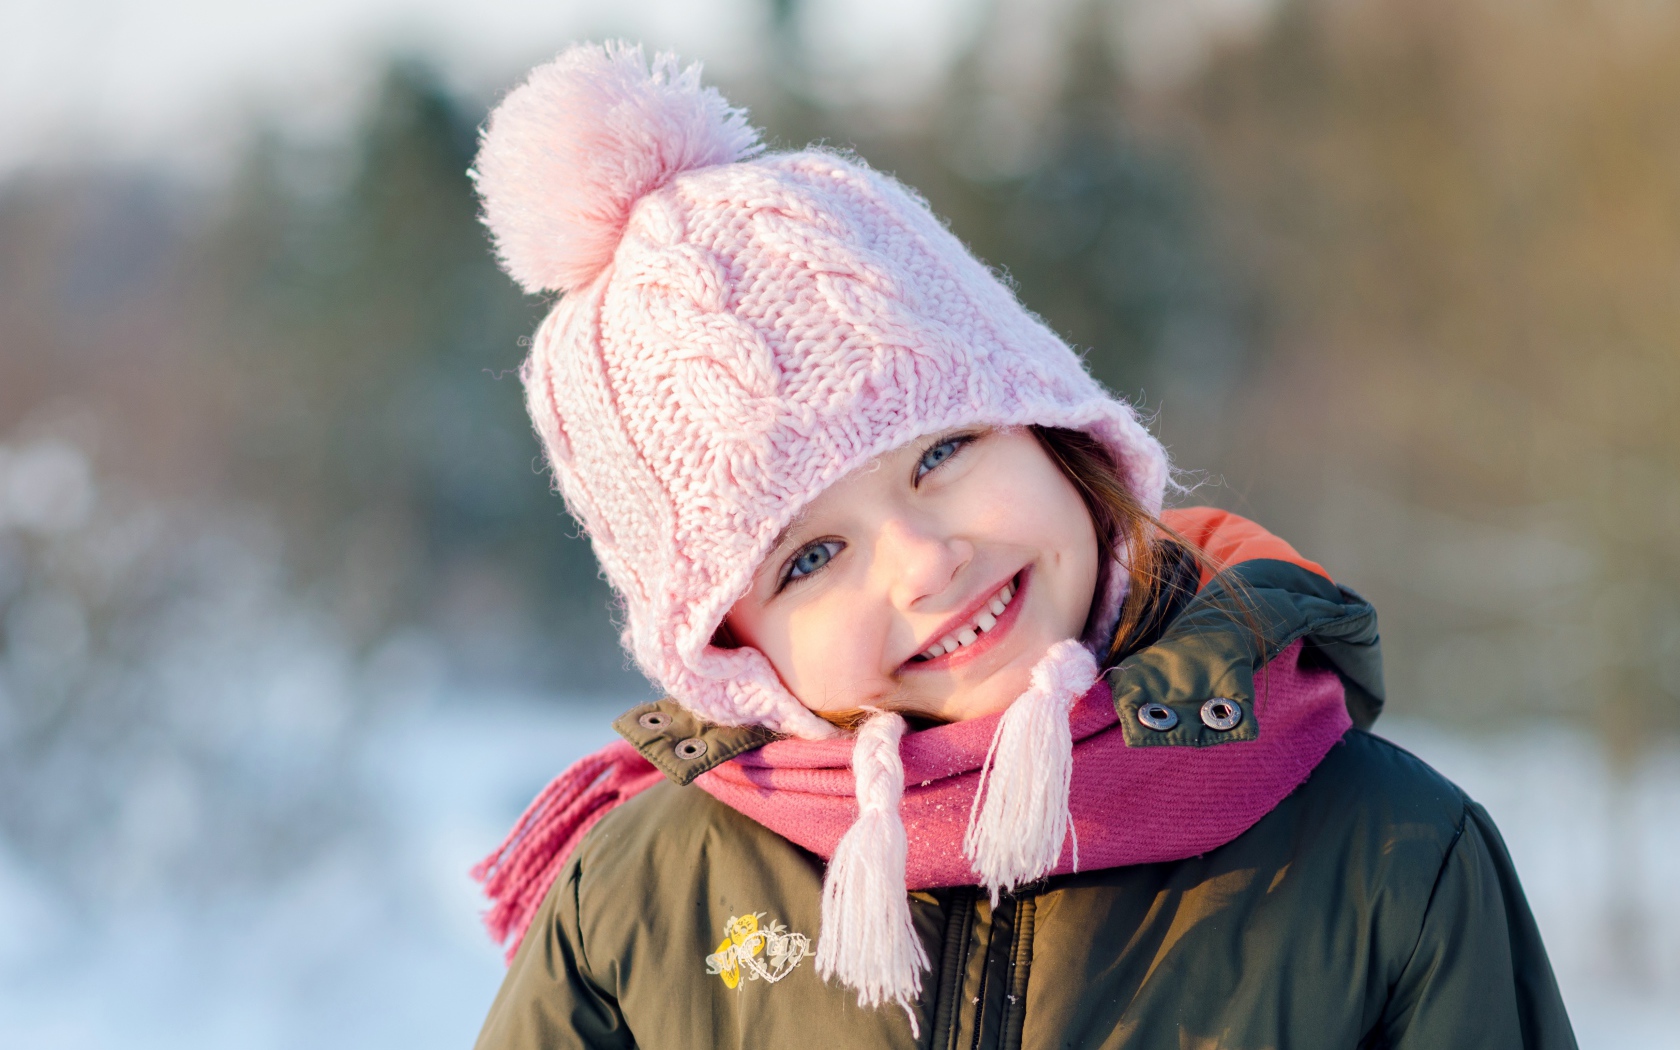 Smiling blue-eyed girl in pink hat